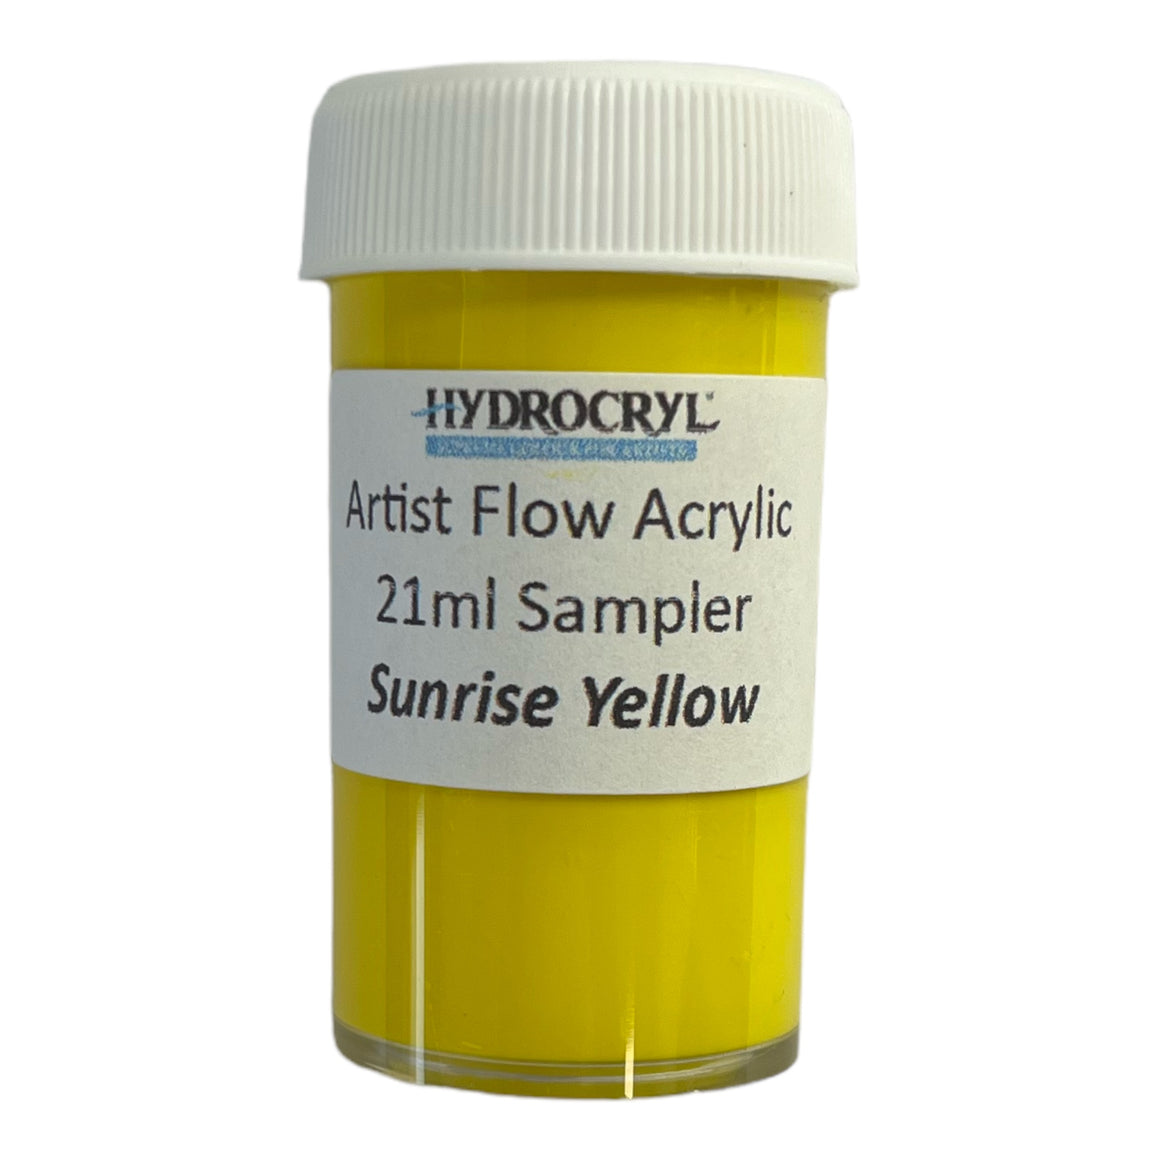 SUNRISE YELLOW Hydrocryl Artist Flow Acrylic 21ml Sampler